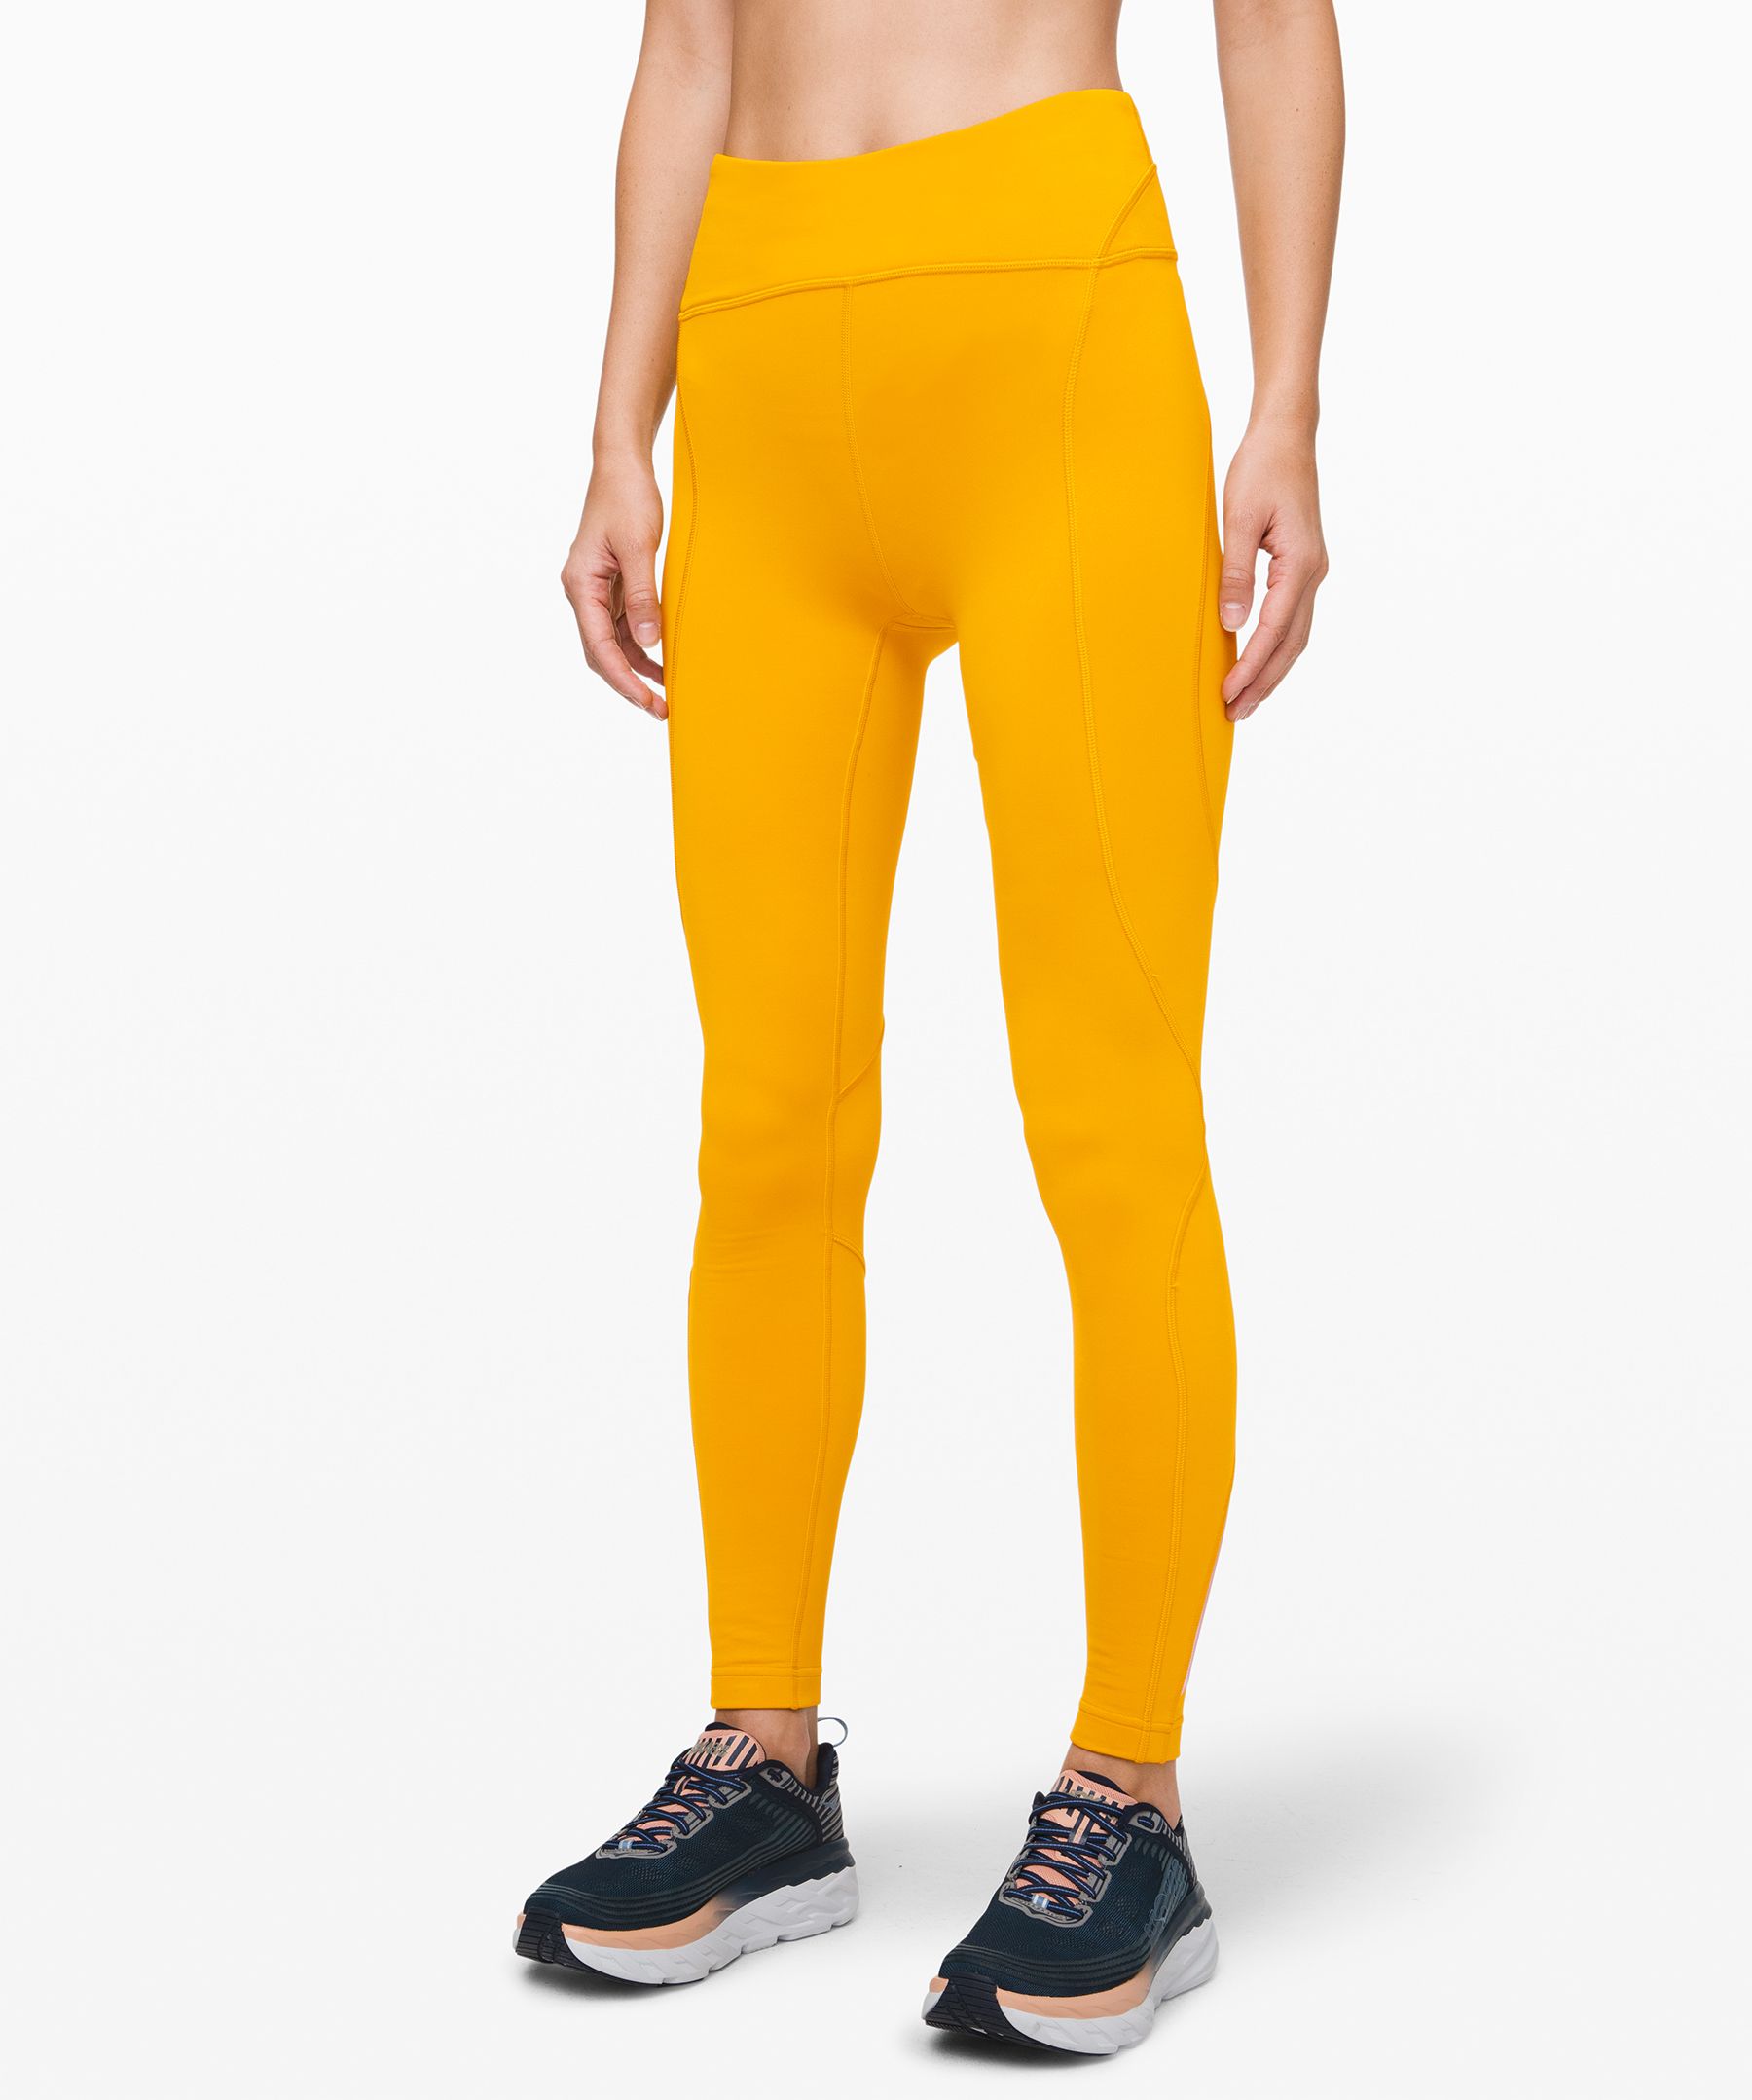 lululemon yellow leggings